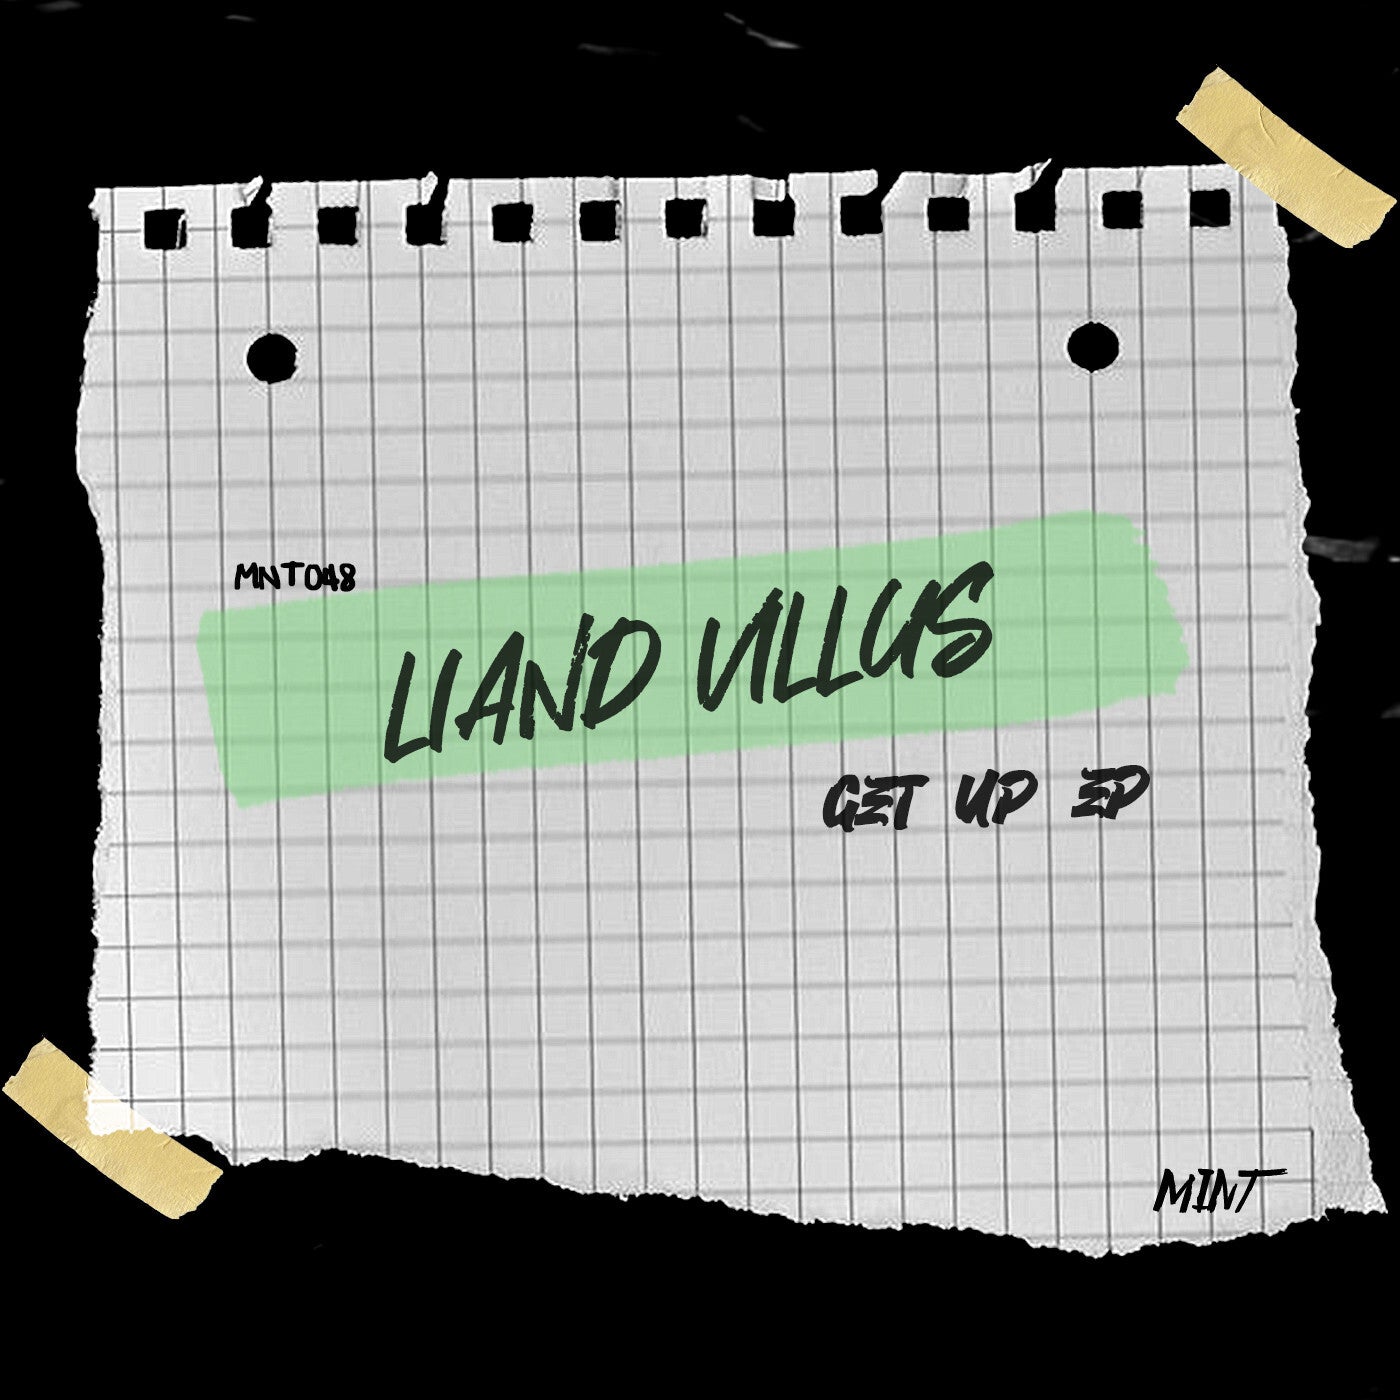 Liand Villus – Get Up EP [MNT048]